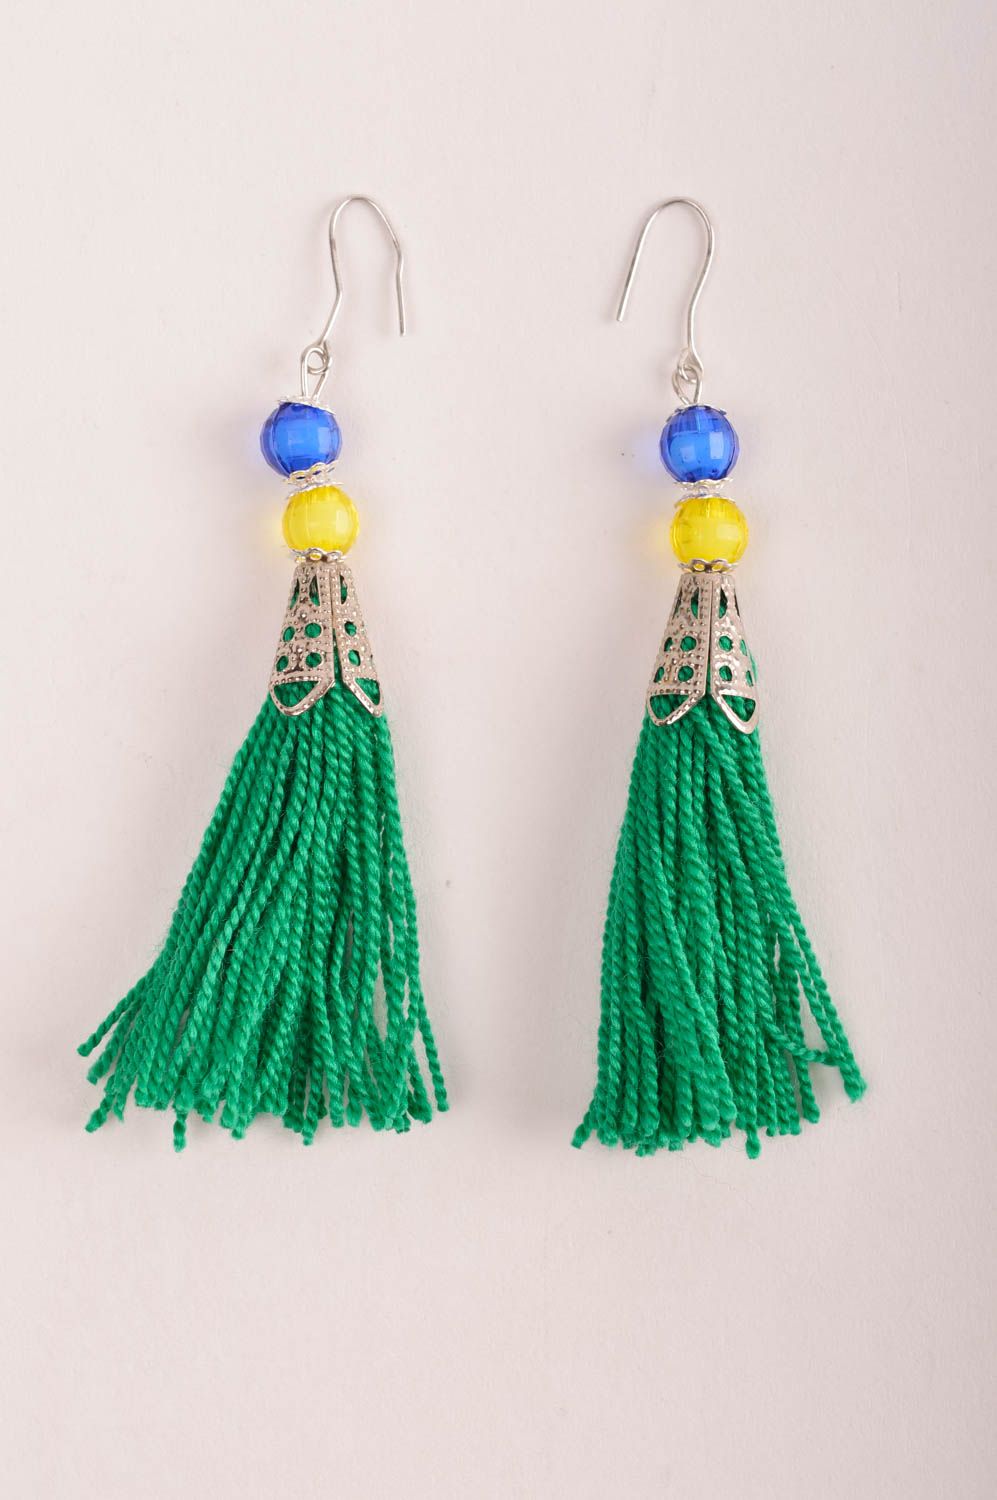 Handmade tassel earrings thread earrings textile jewelry designs gifts for her photo 3